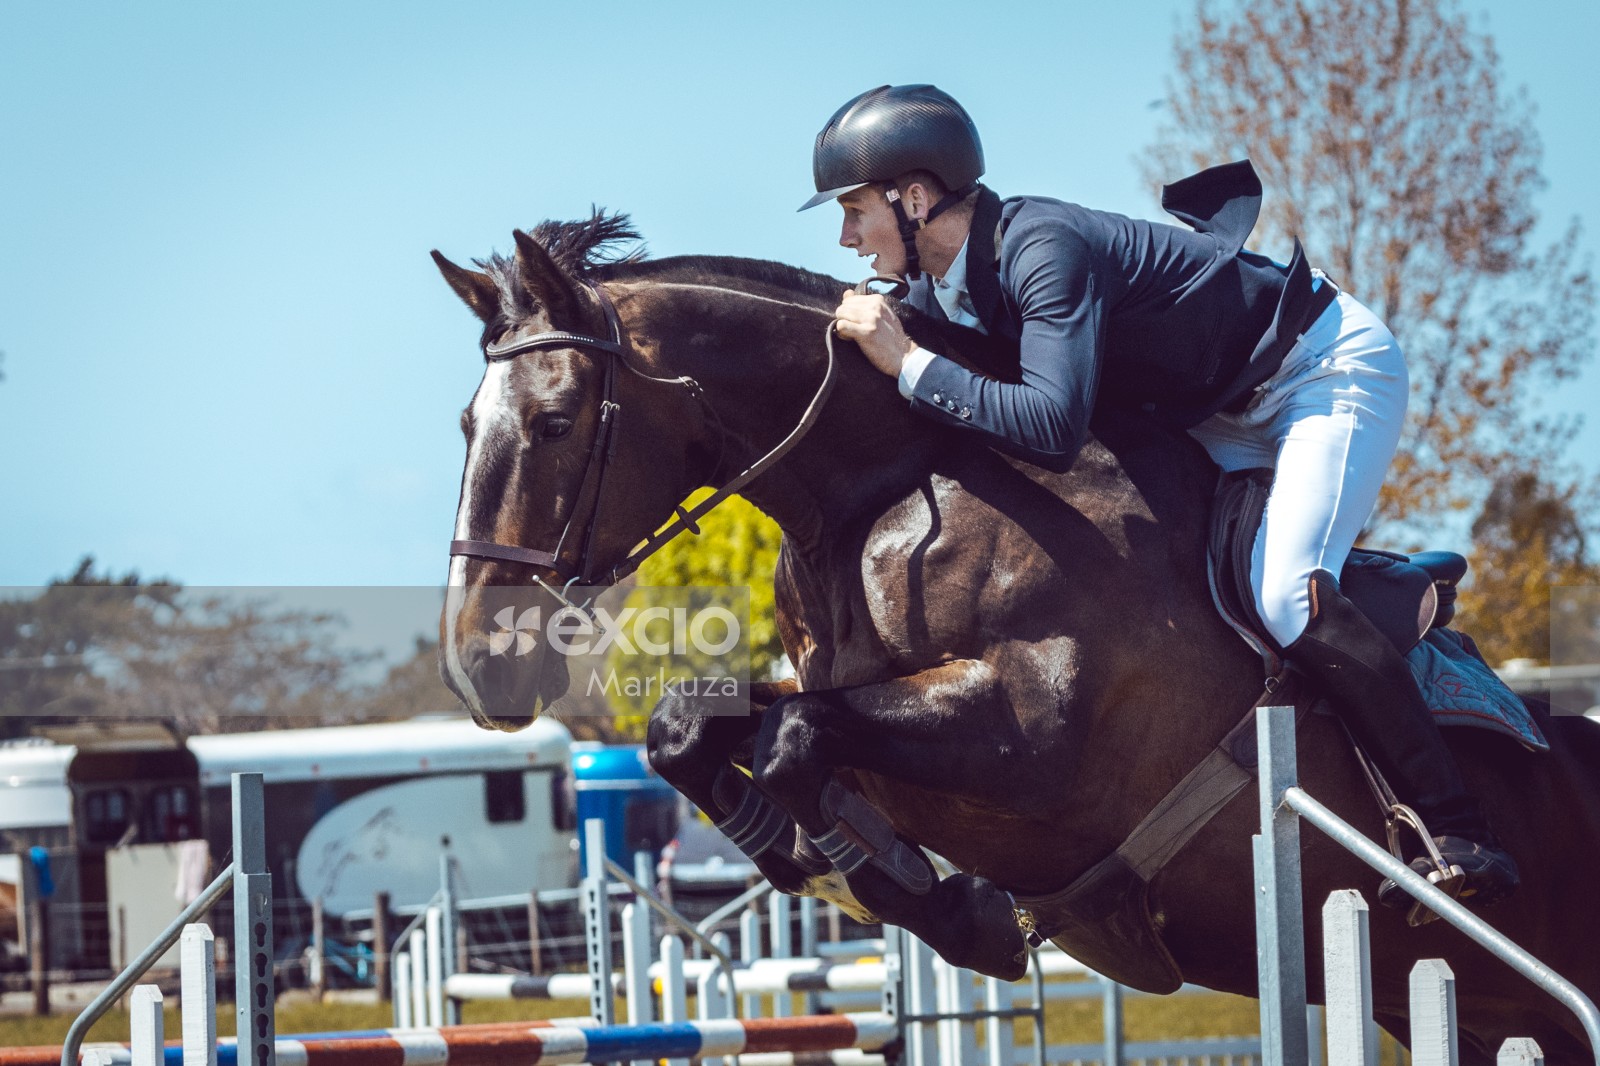 Dark horse jump and enthusiast jockey